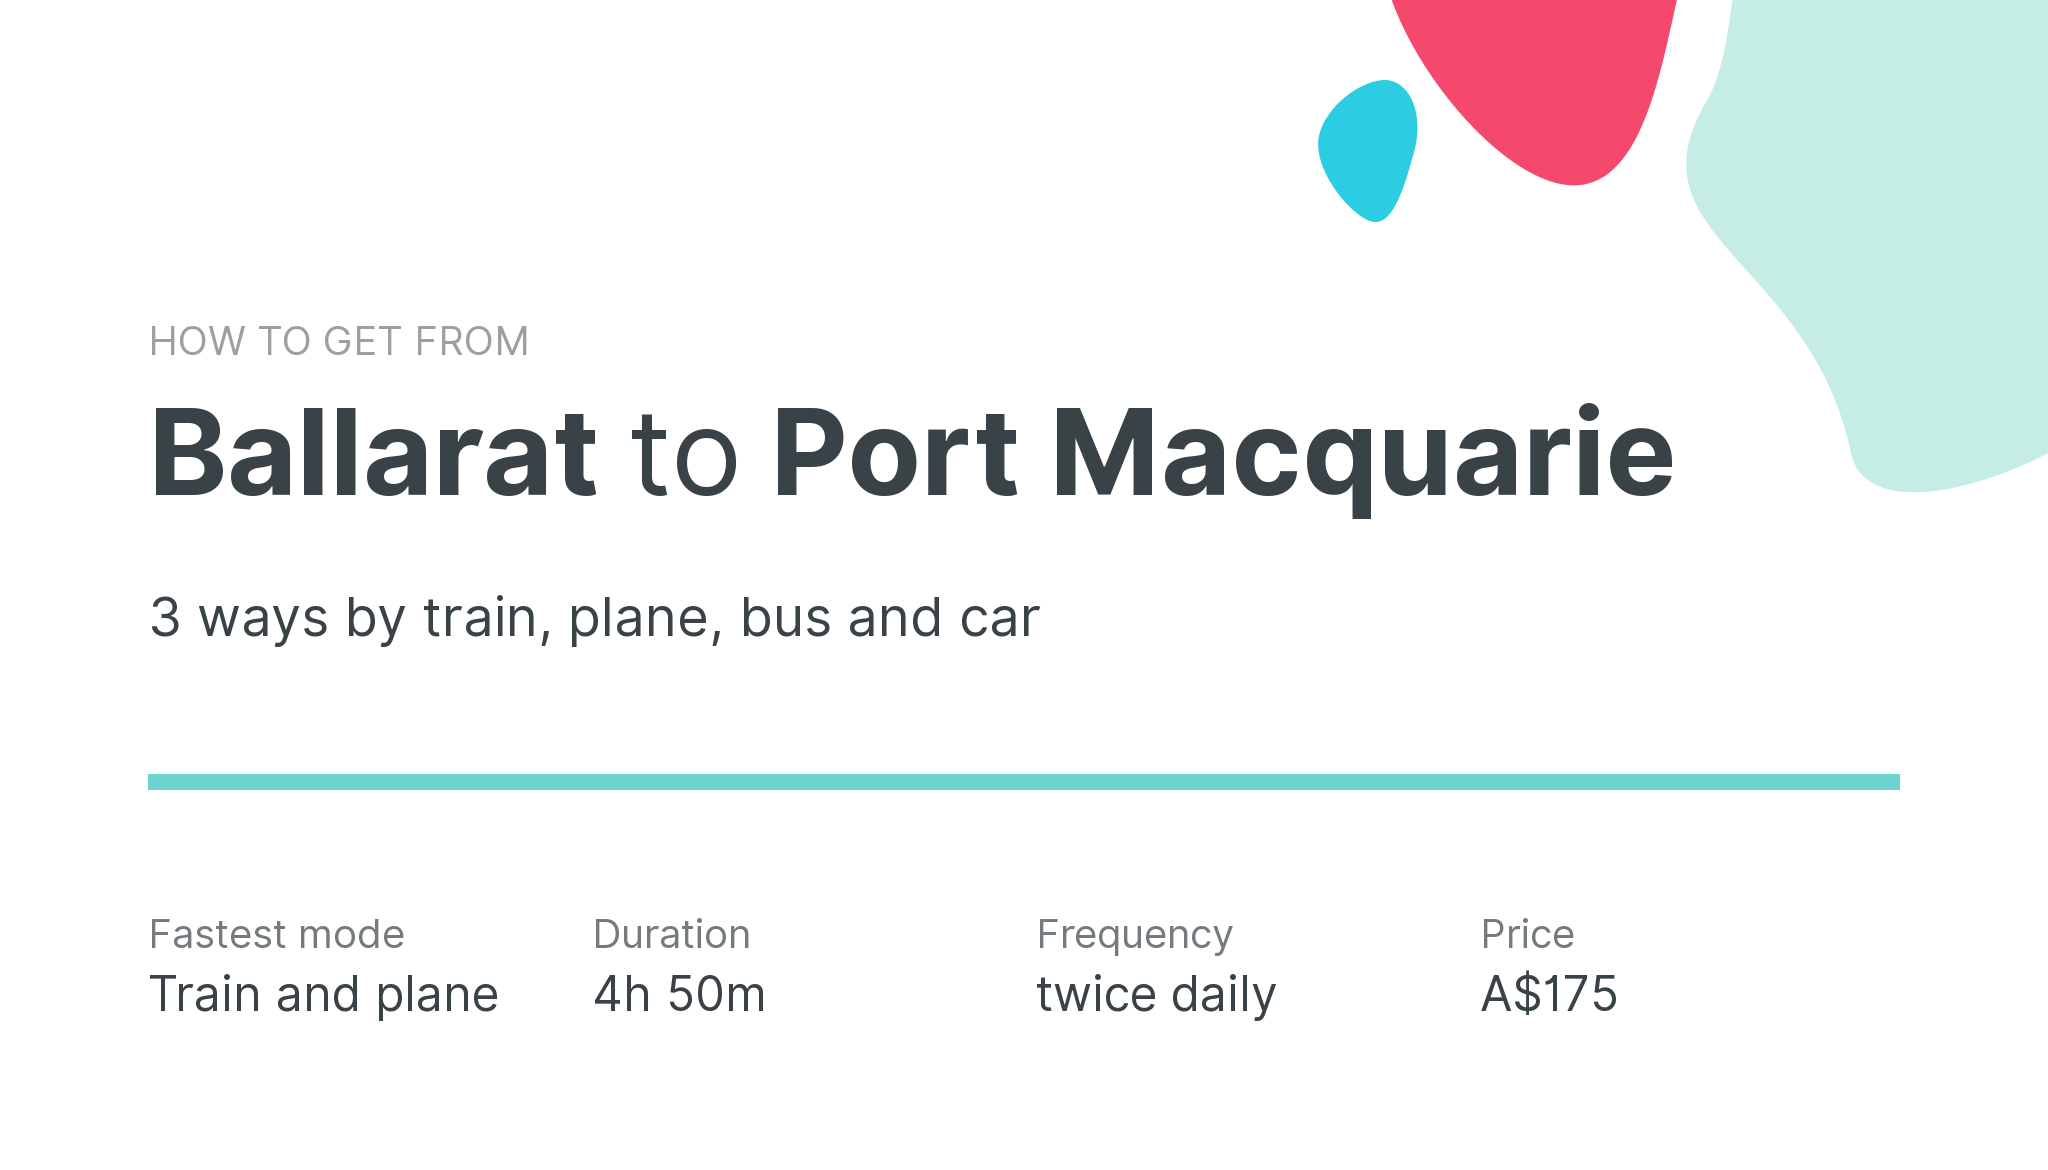 How do I get from Ballarat to Port Macquarie